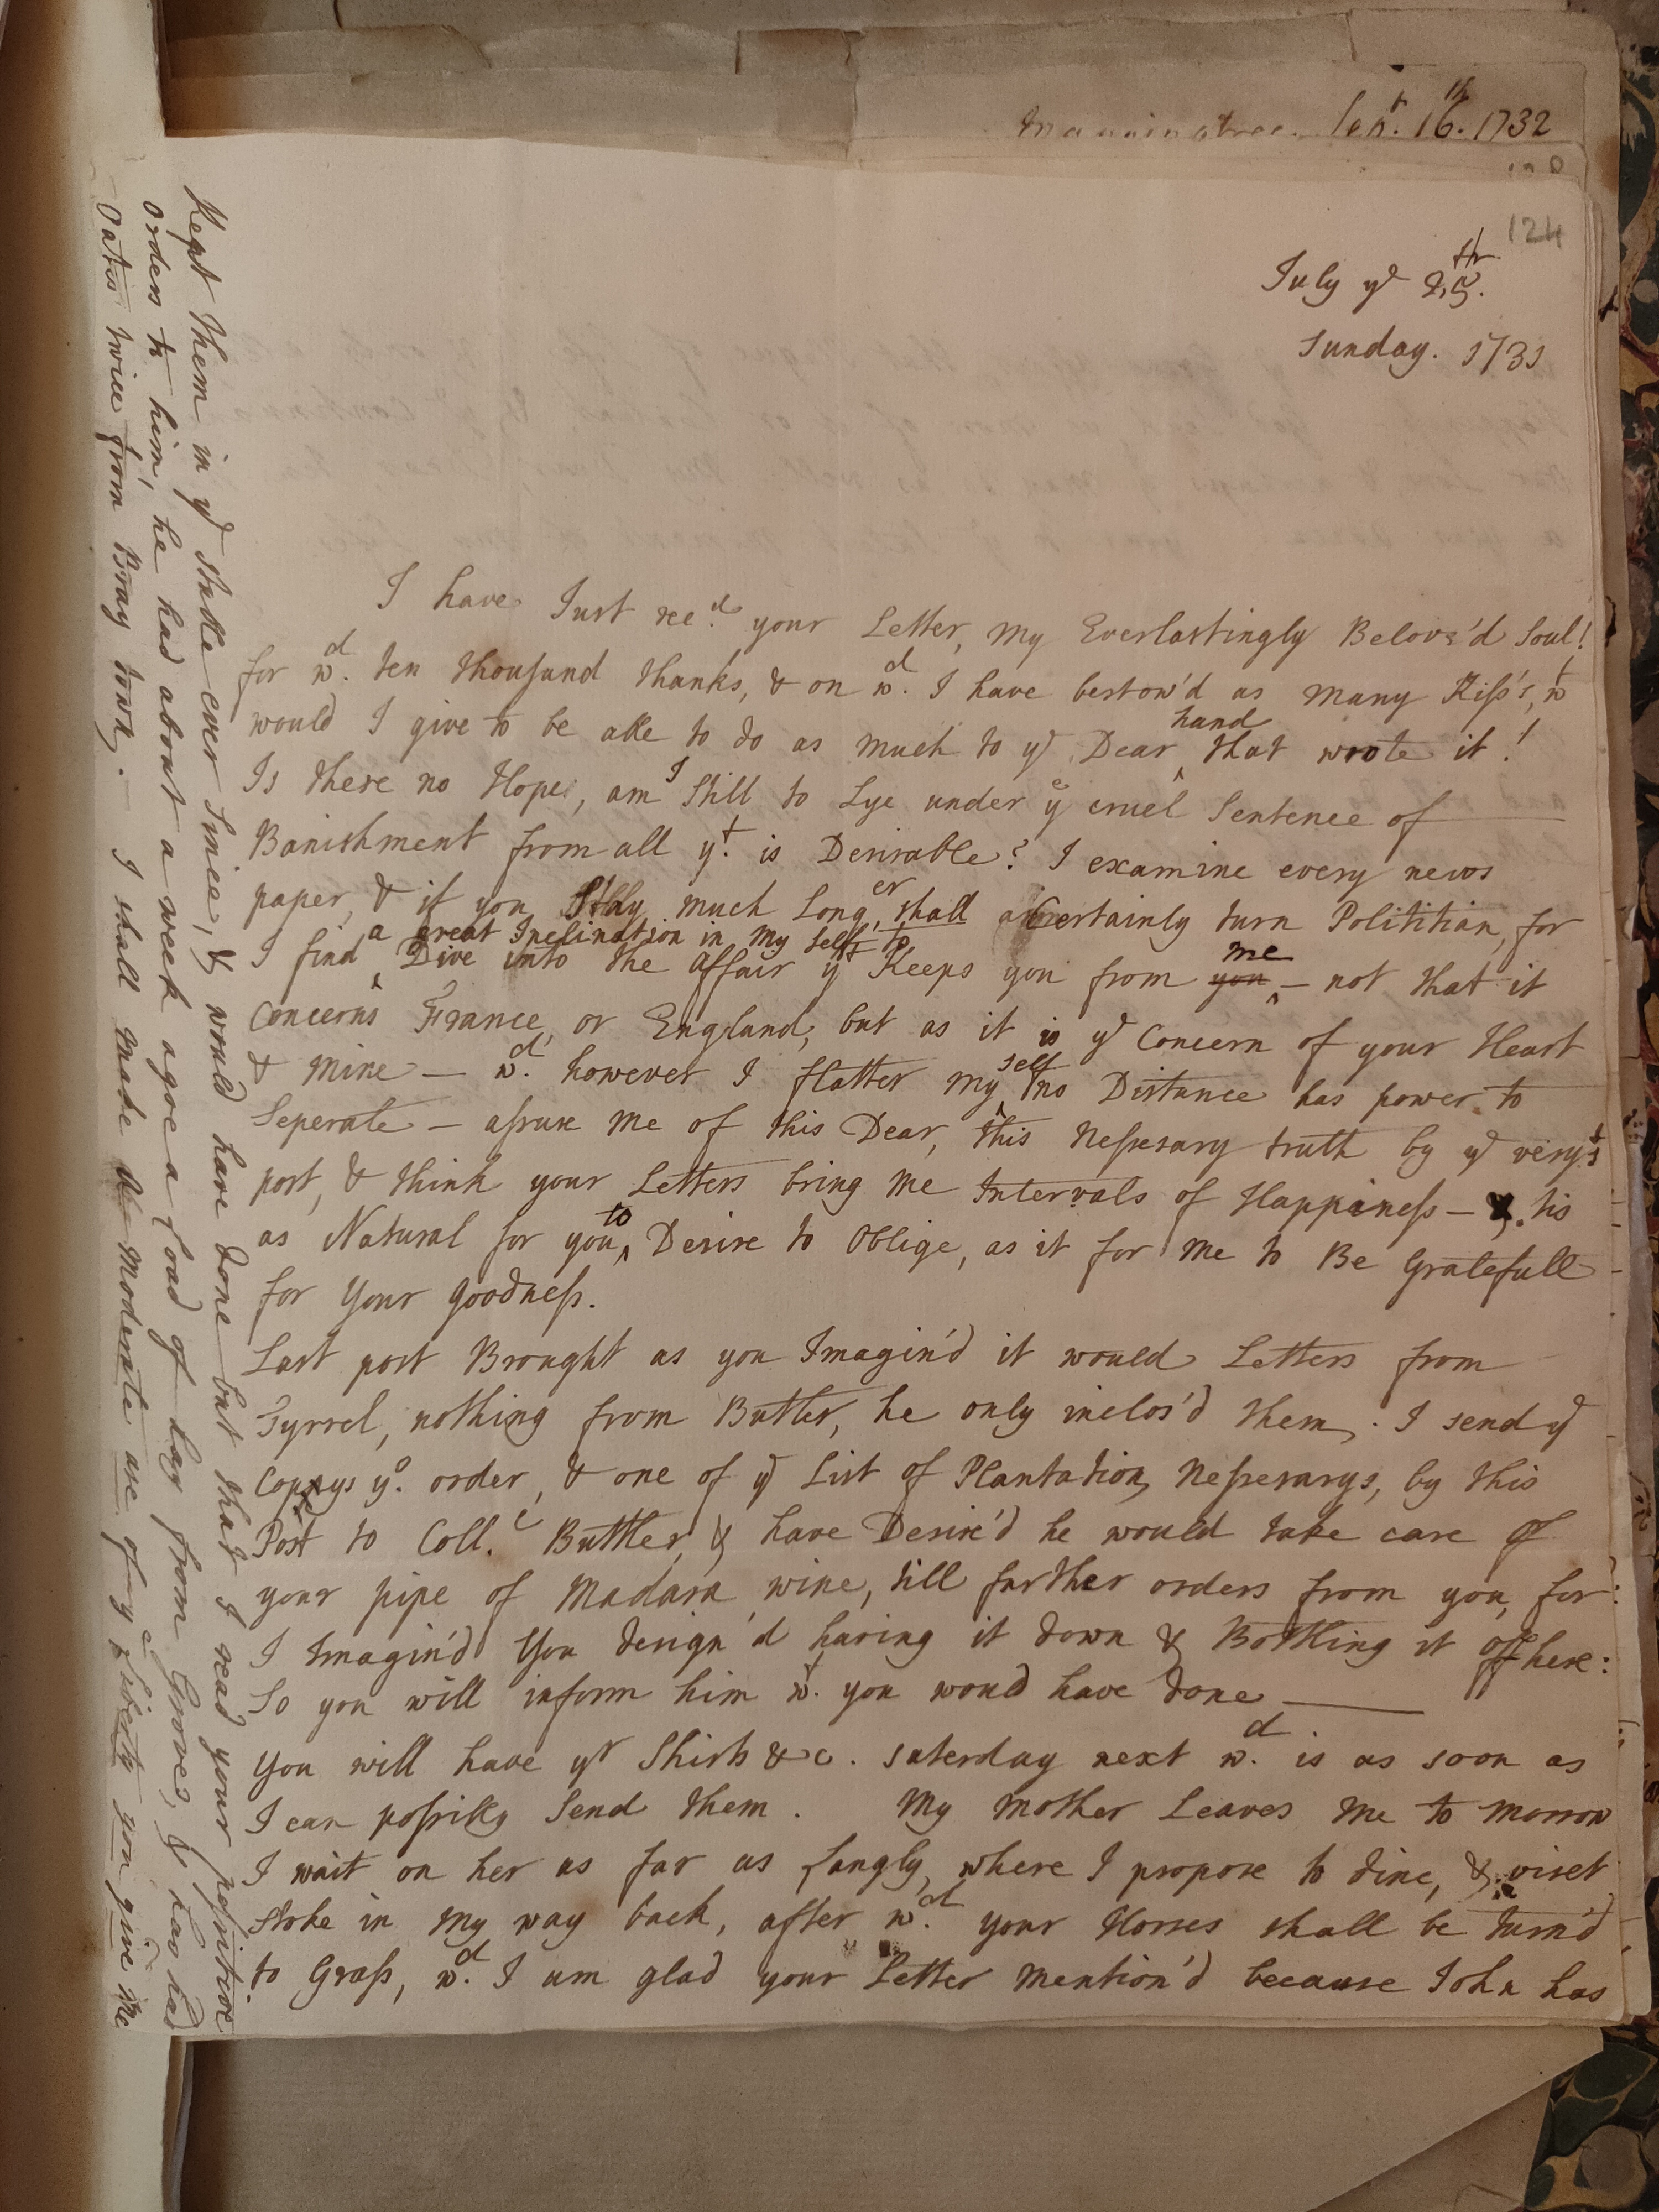 Image #1 of letter: Judith Madan to Martin Madan, 24 July 1731